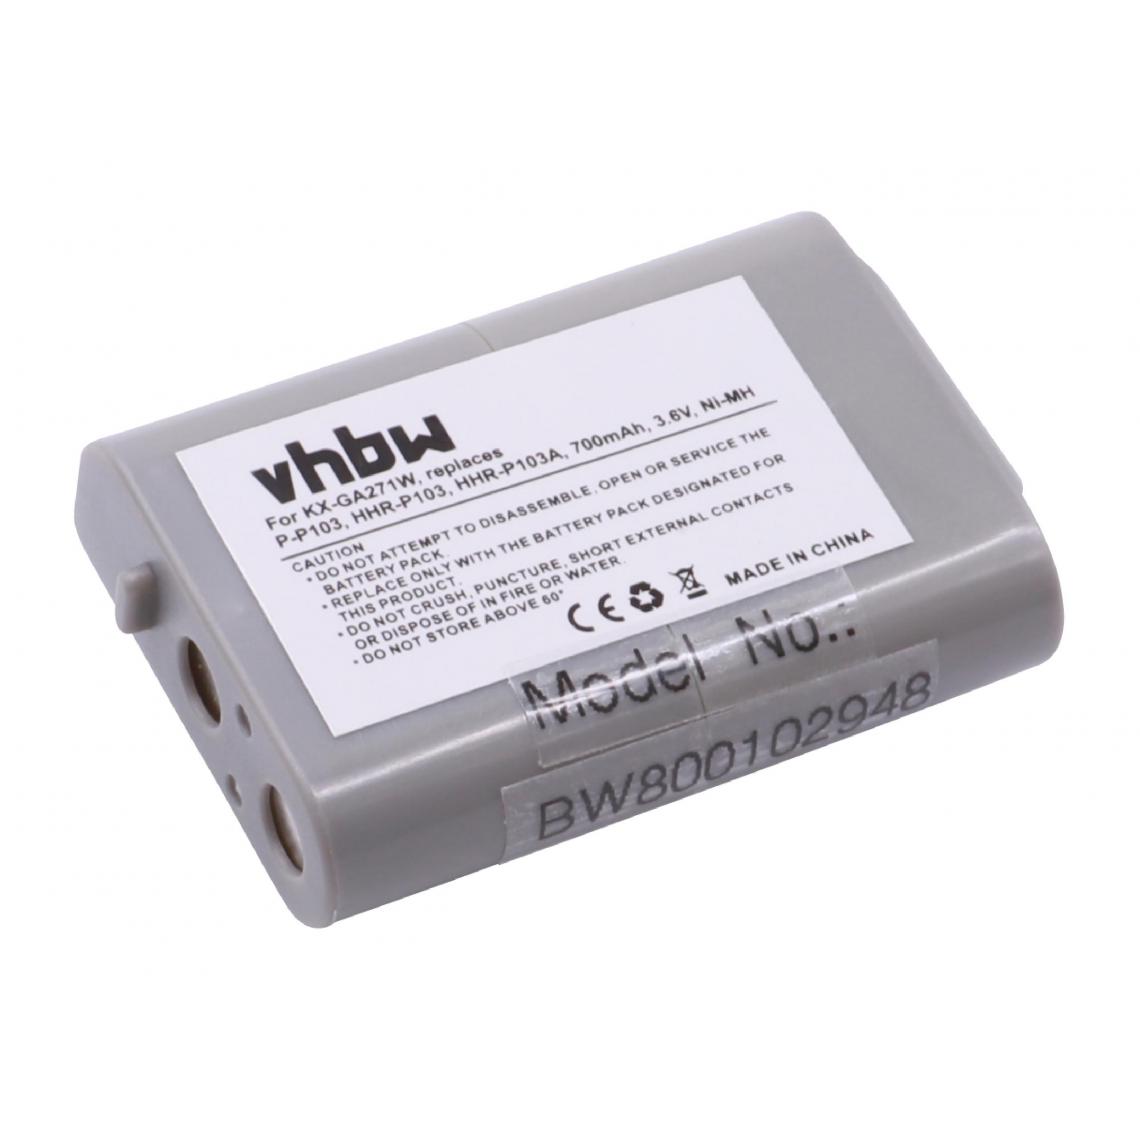 Vhbw - vhbw Batterie compatible avec Panasonic KX-TG2383BP, KX-TG2383PK, KX-TG2383S, KX-TGA230 téléphone fixe sans fil (700mAh, 3,6V, NiMH) - Batterie téléphone